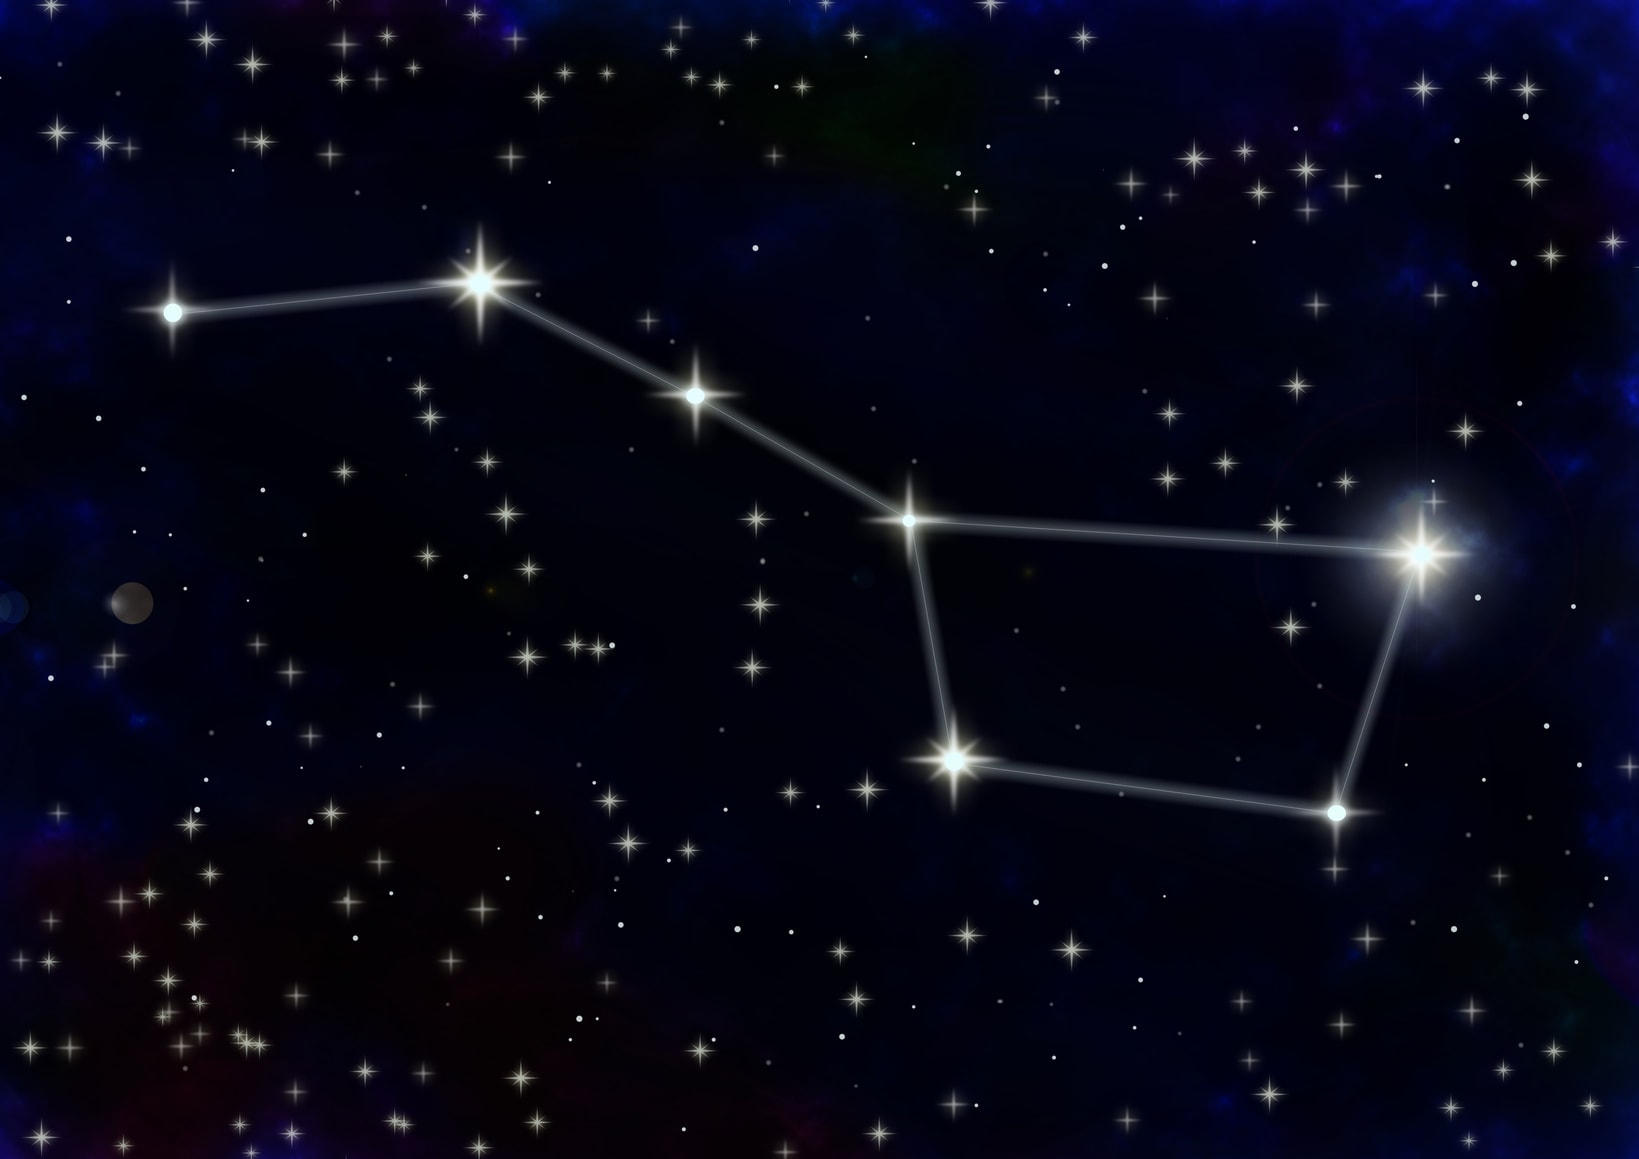 Big dipper constellation